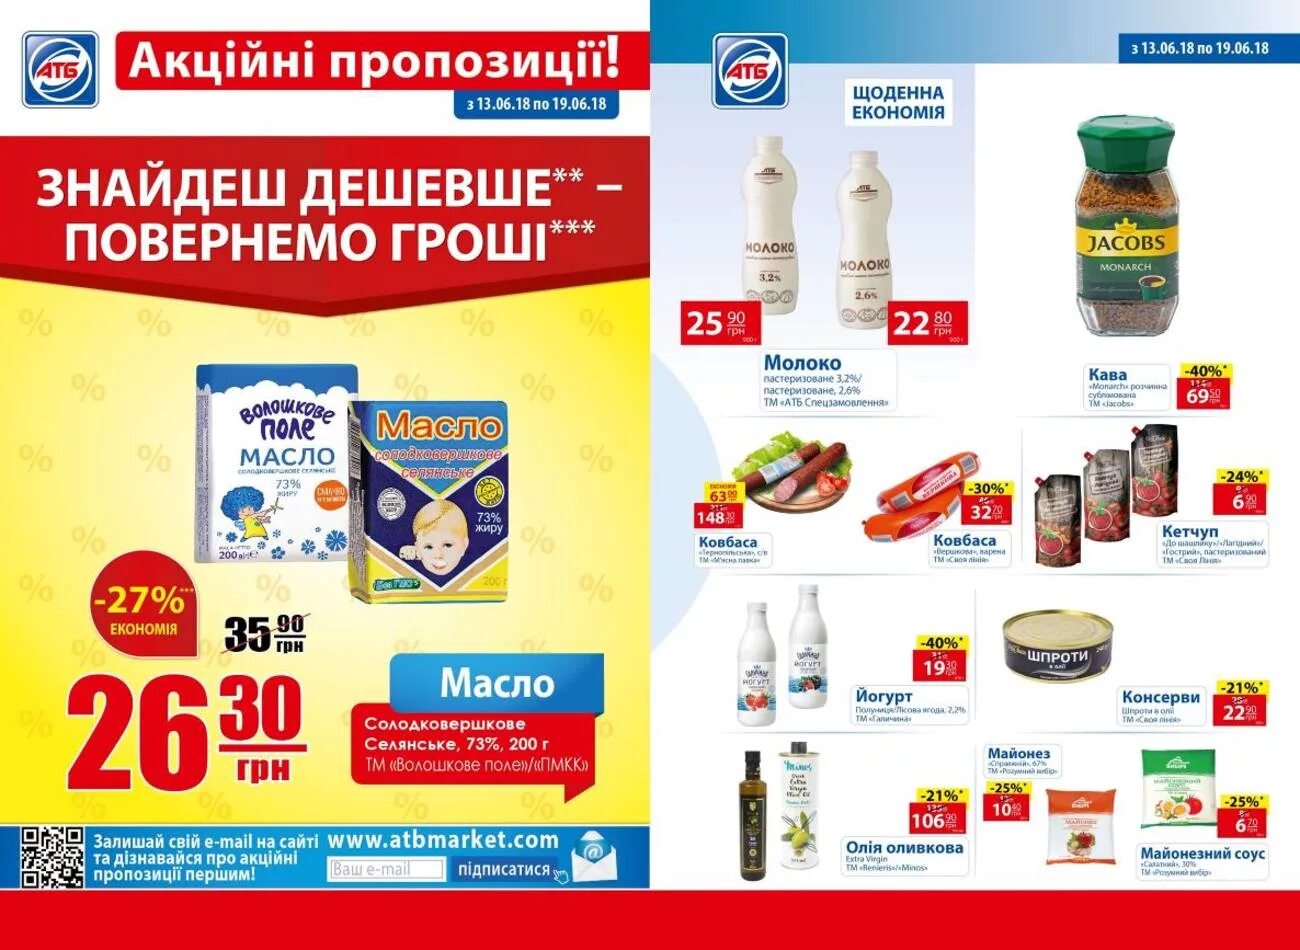 АТБ магазин. АТБ продукты. АТБ супермаркет Украина. АТБ логотип магазин.